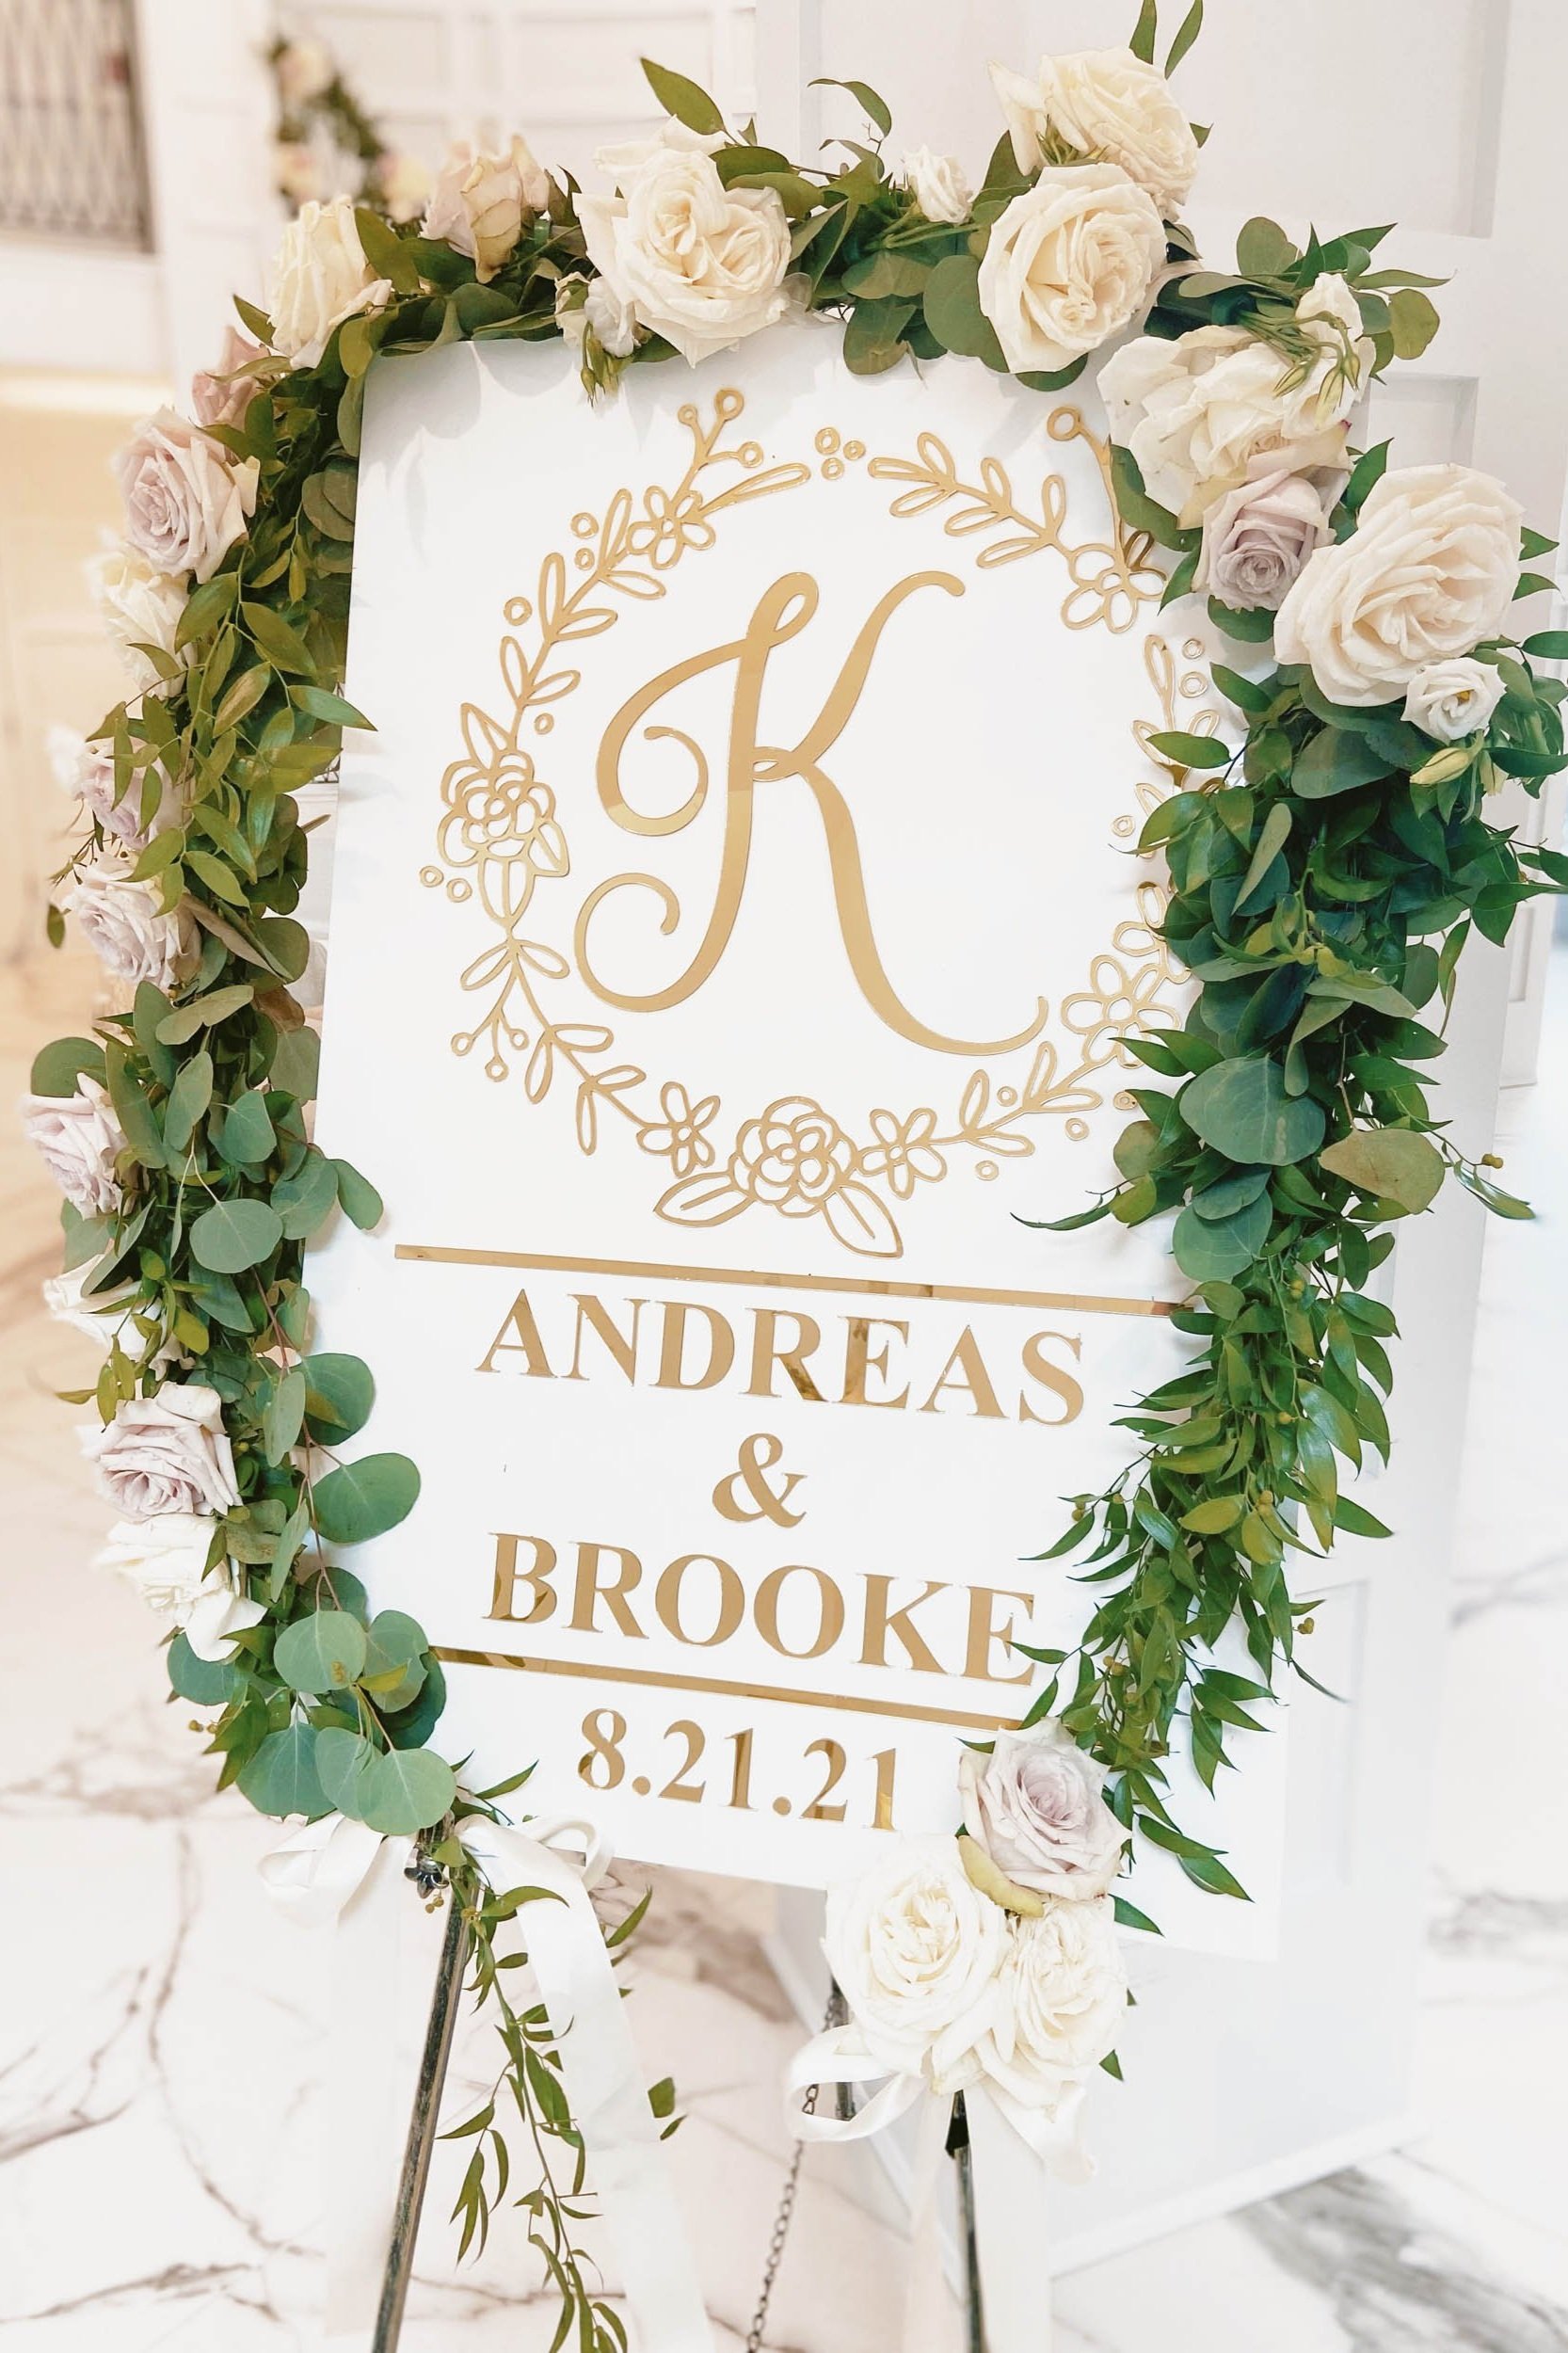 hengstenbergs-florist-weddings-love-story-brooke-andreas-05-low-quality.jpg